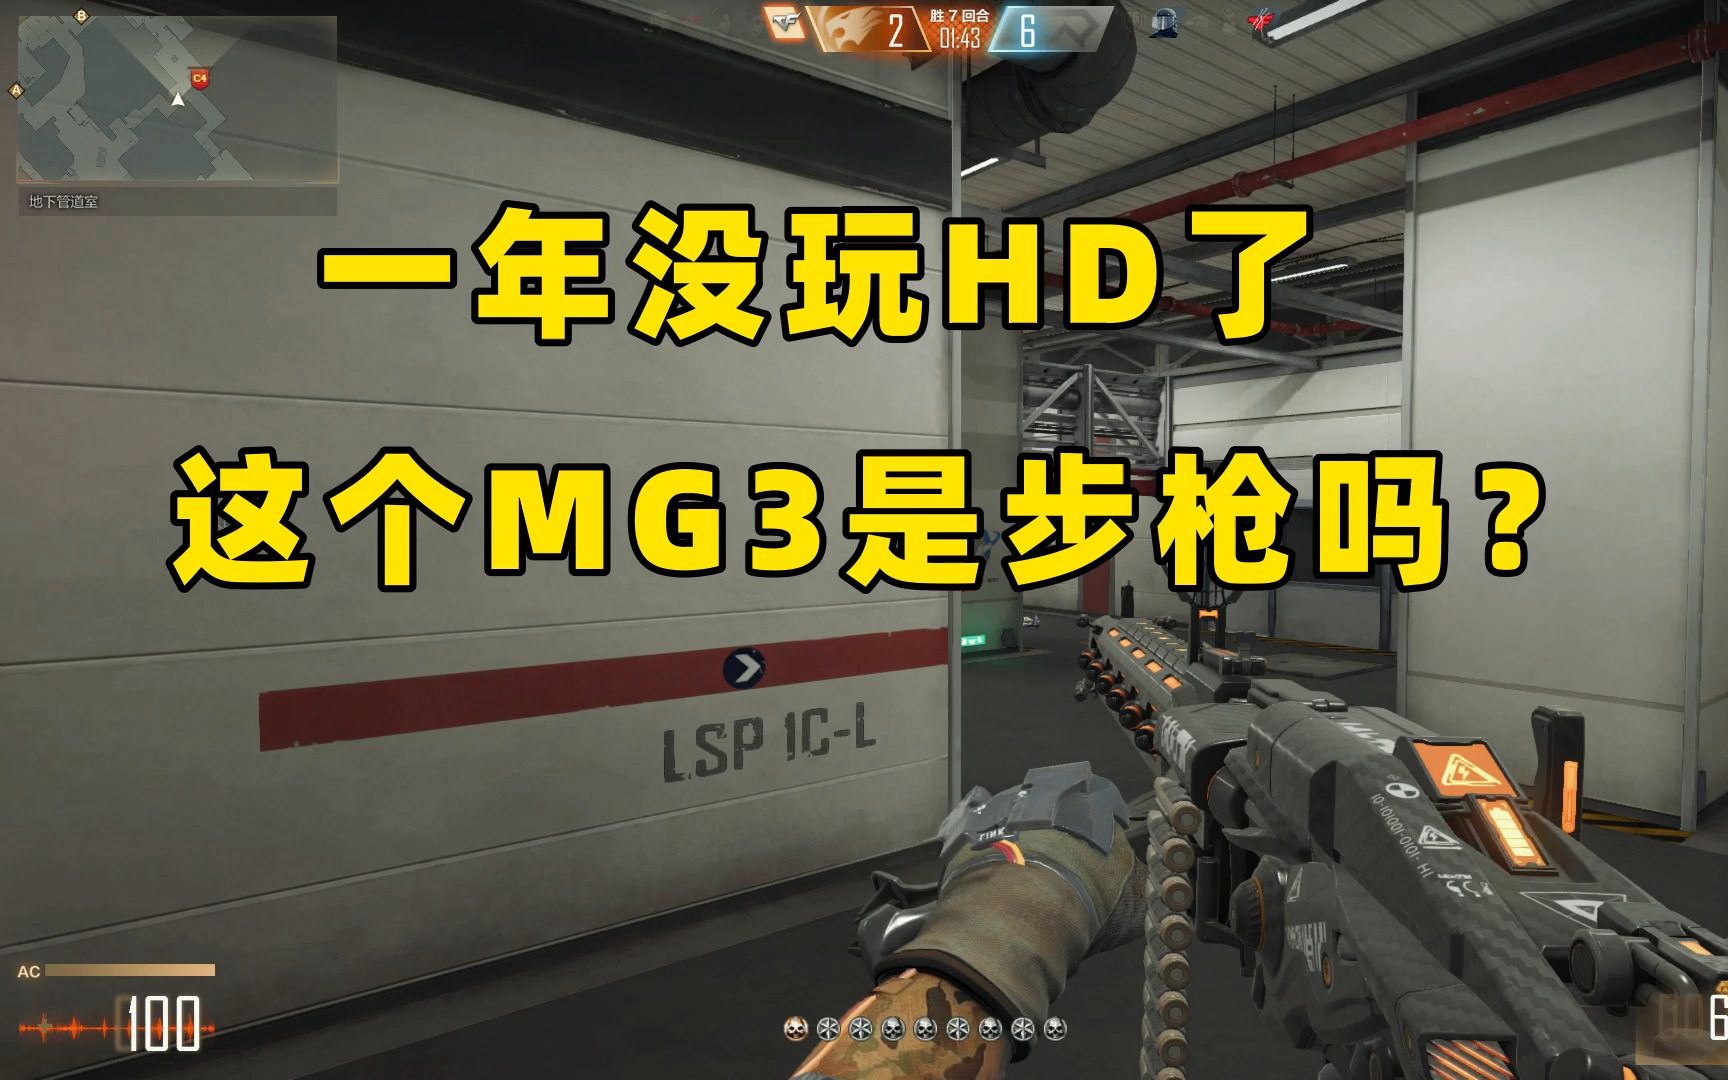 CFHD 一年没玩HD了这个MG3是步枪吗？